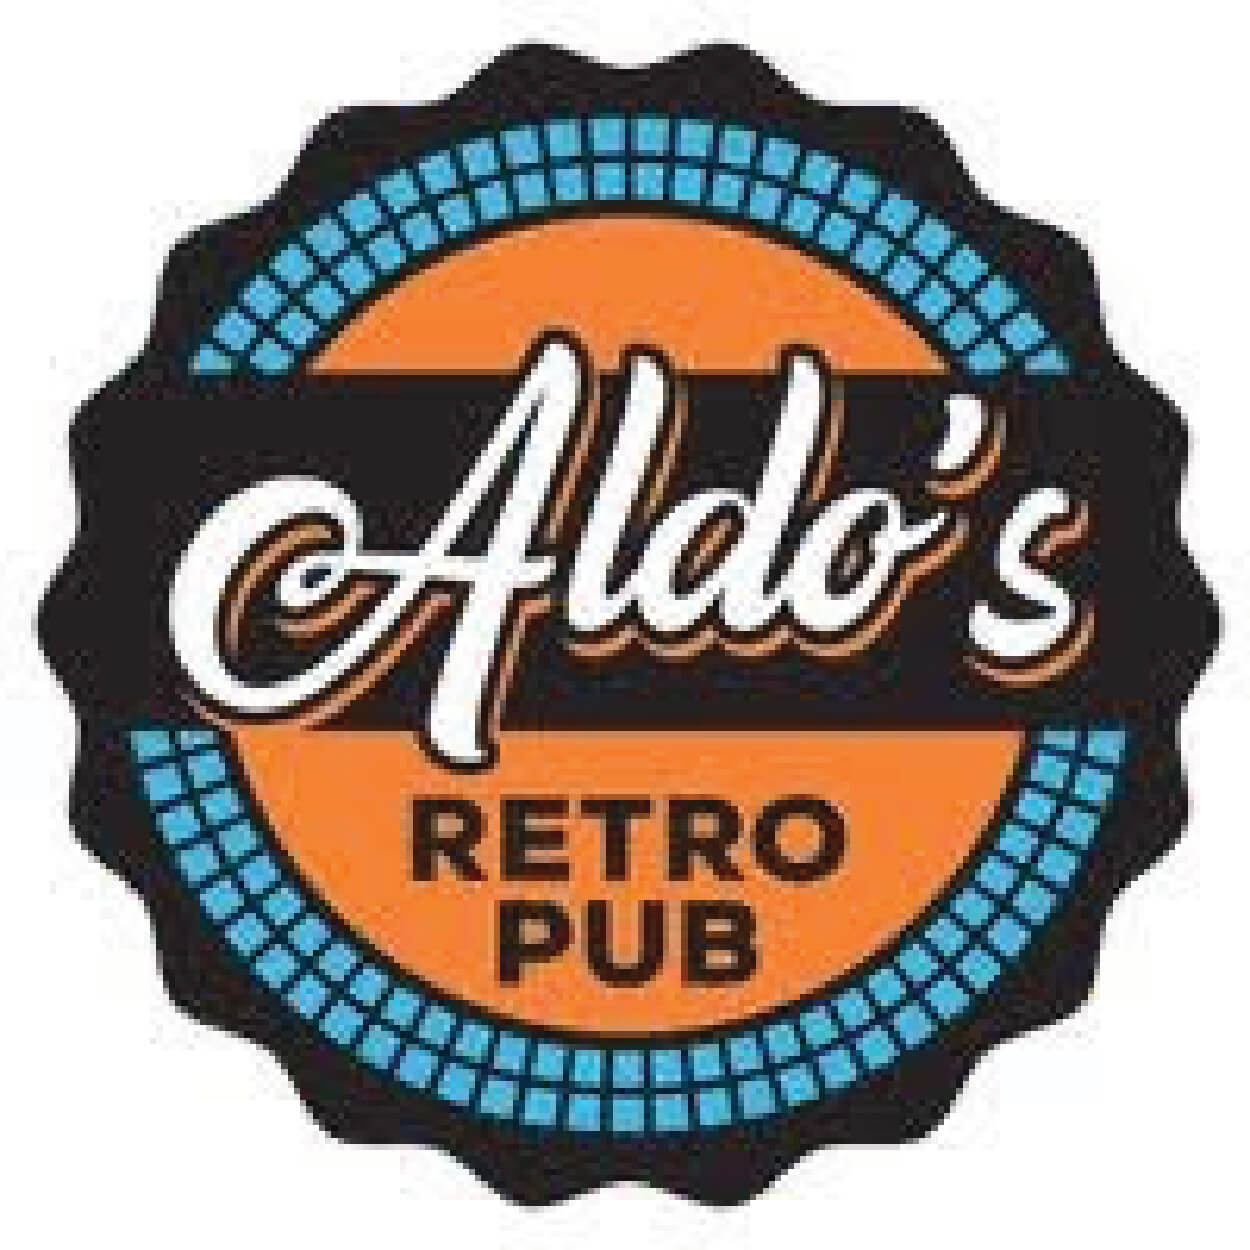 Aldo's retro pub